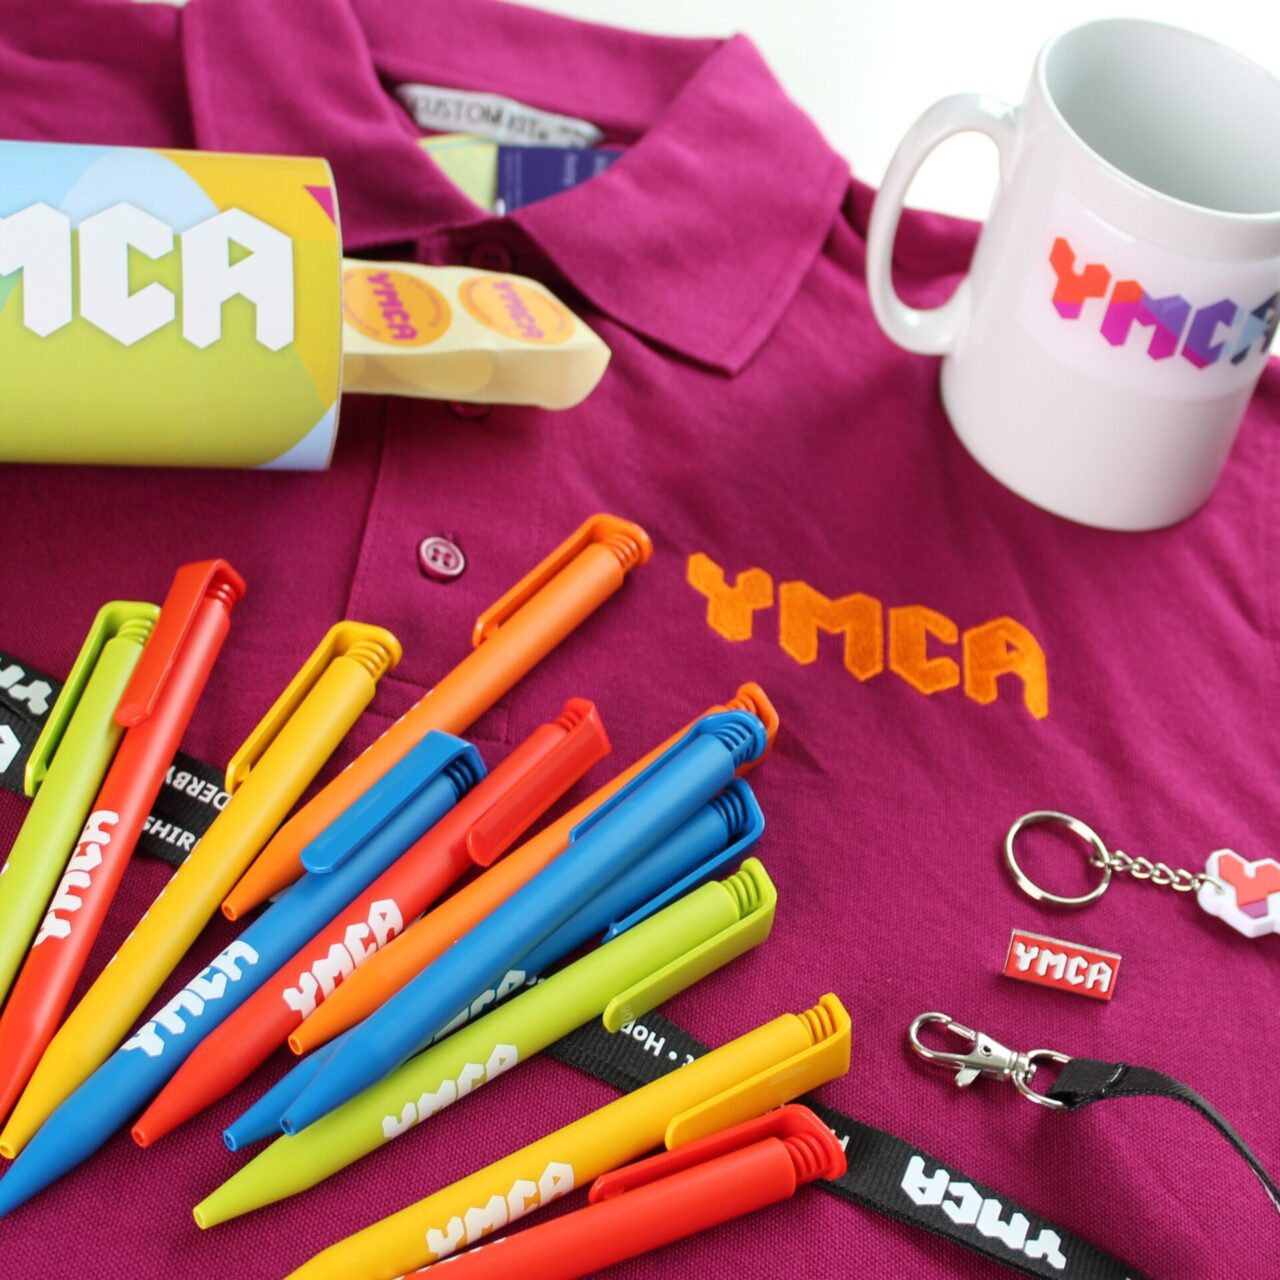 YMCA colour merchandise